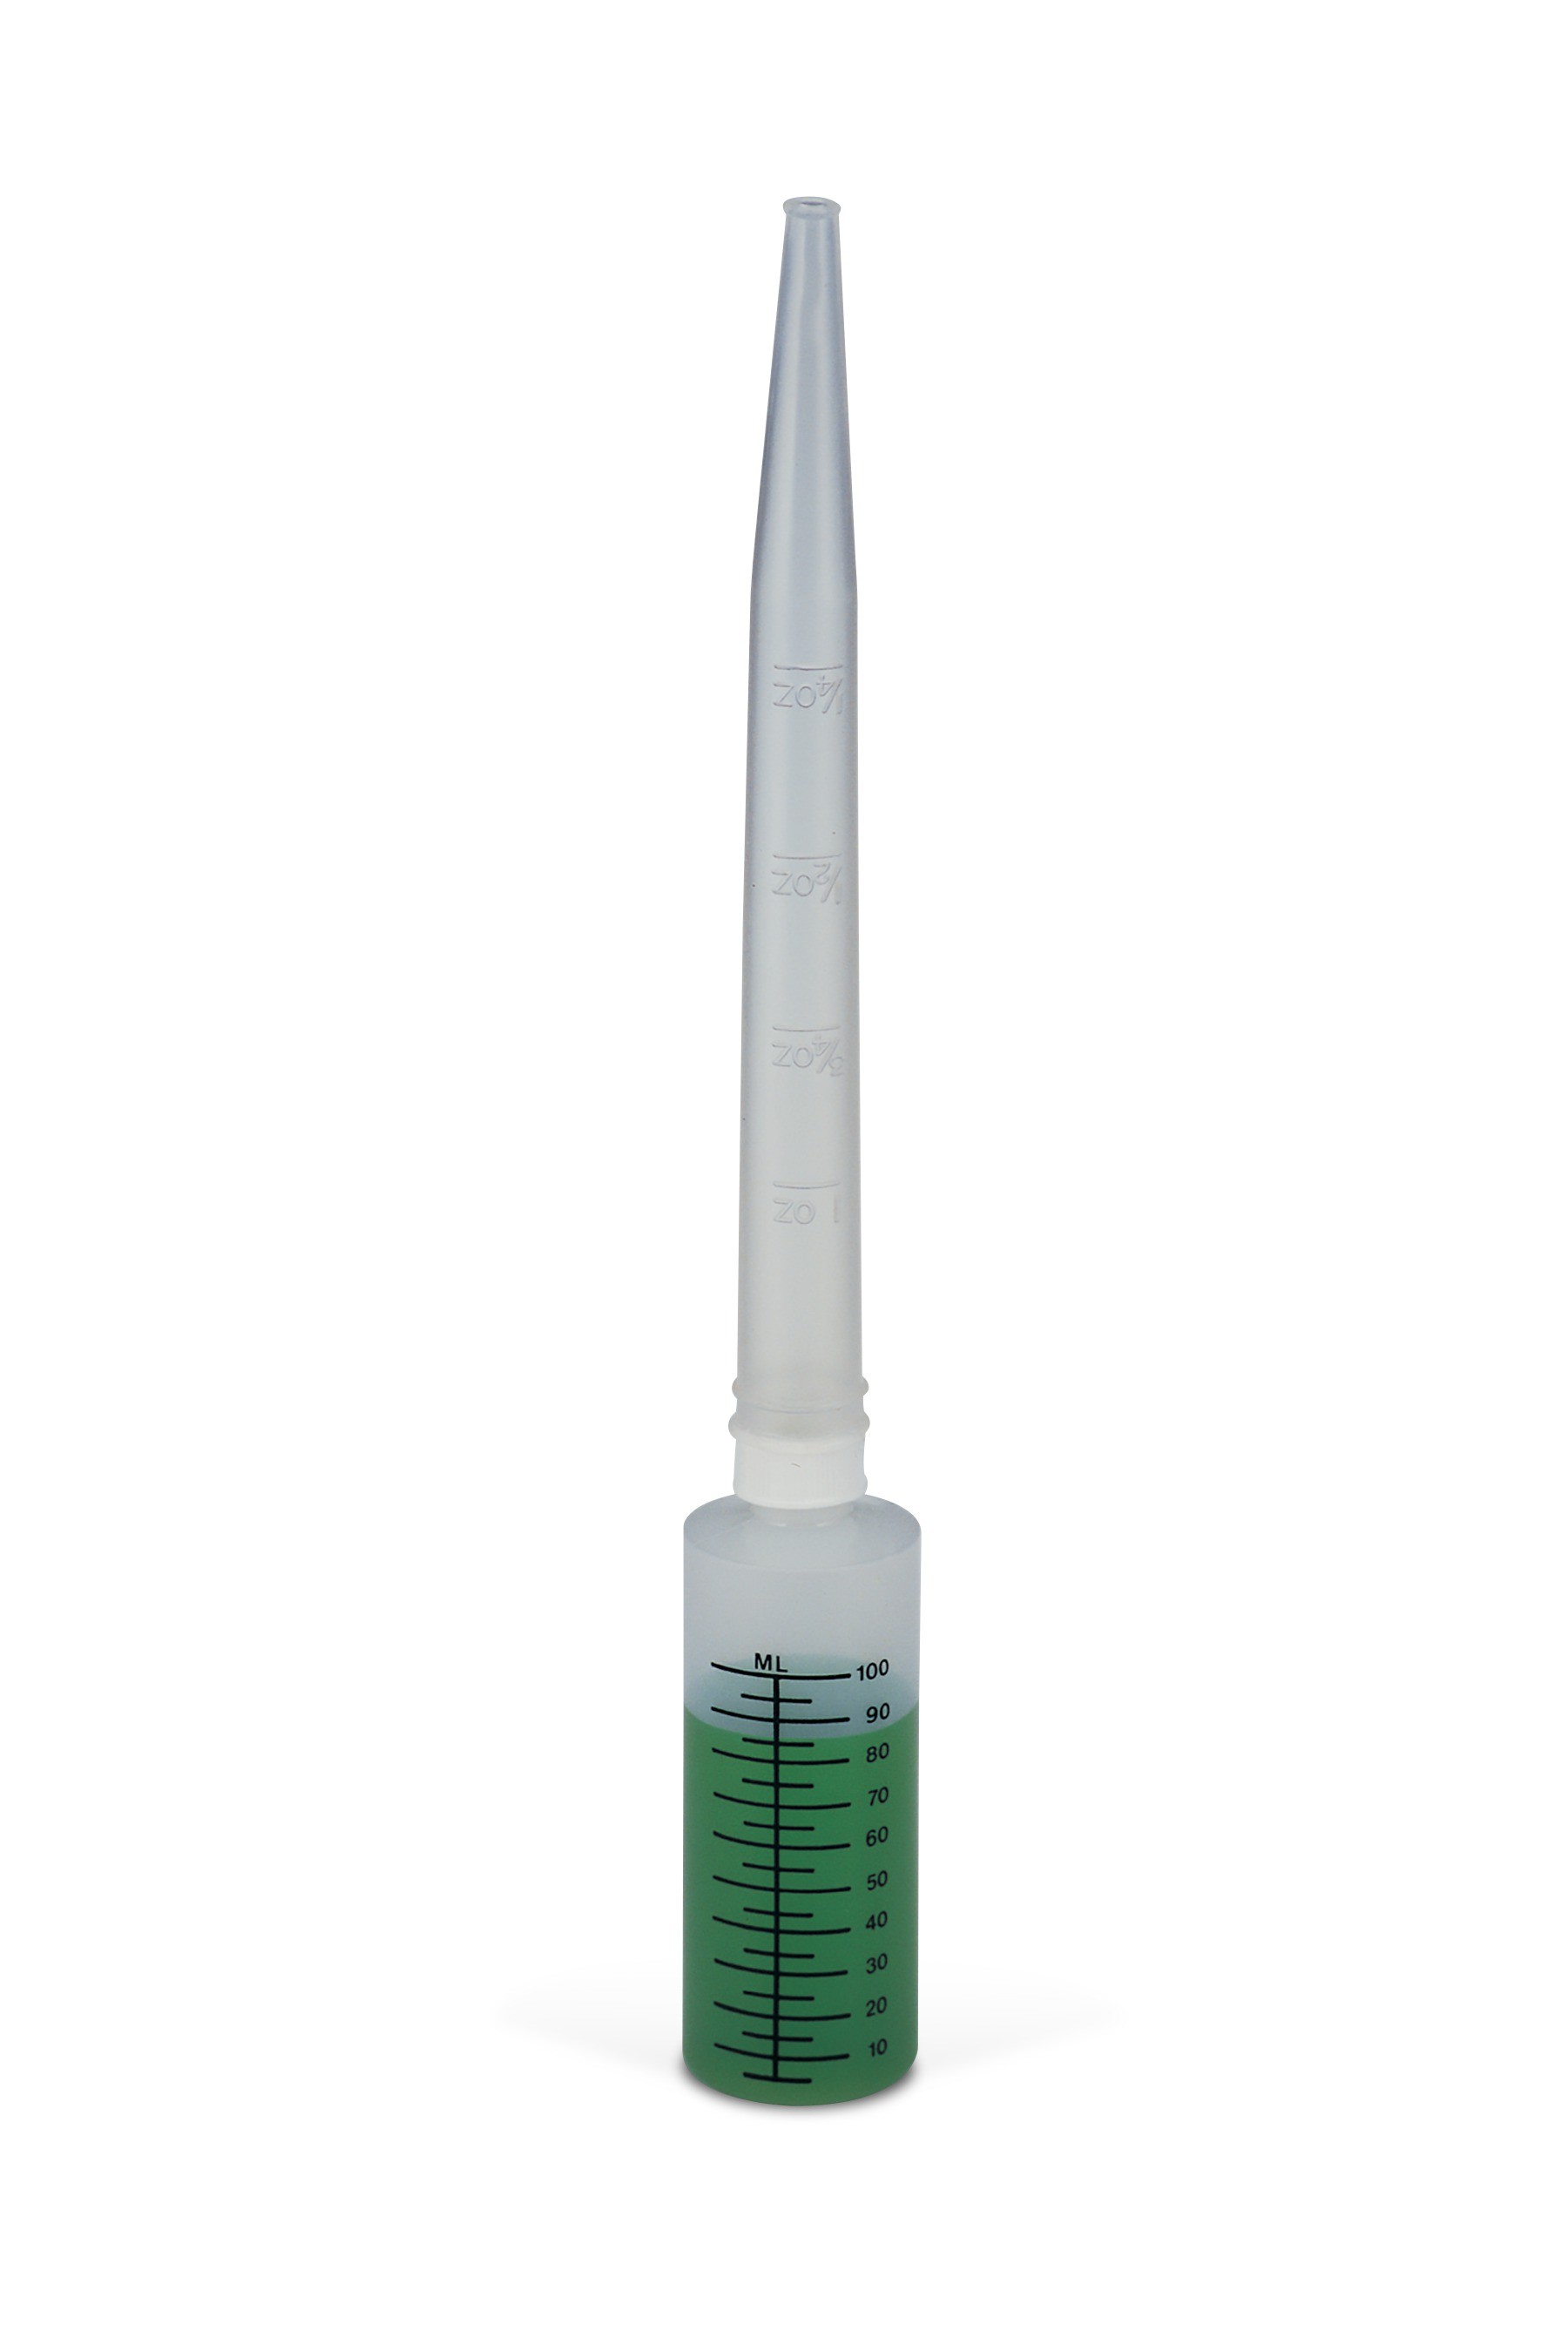 SP Bel-Art Sampler Syringe; 100ml, 11¾ in., Plastic